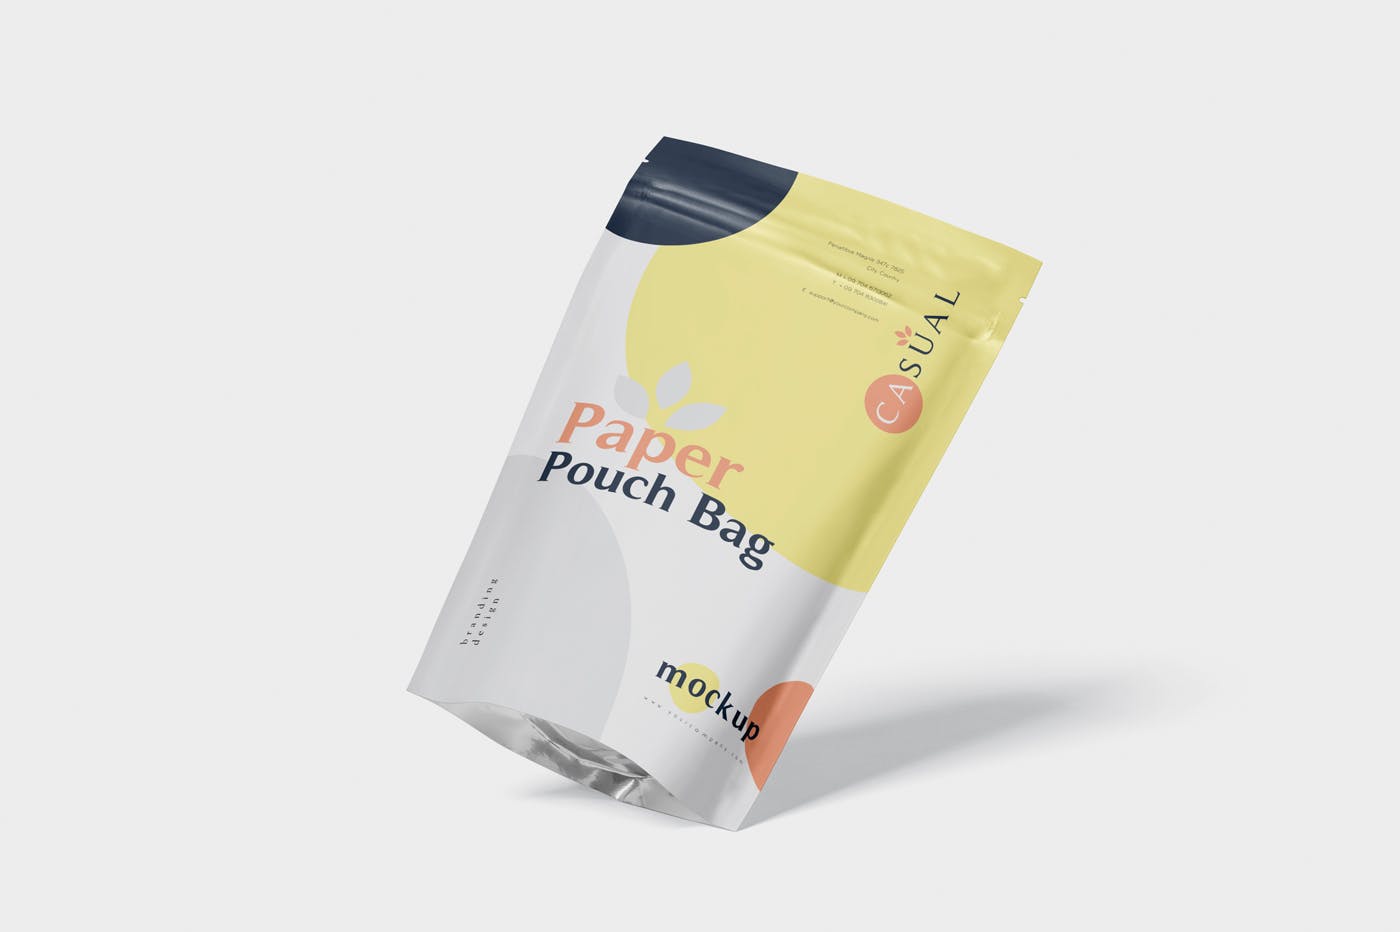 食品自封袋包装设计效果图第一素材精选 Paper Pouch Bag Mockup – Large Size插图(4)